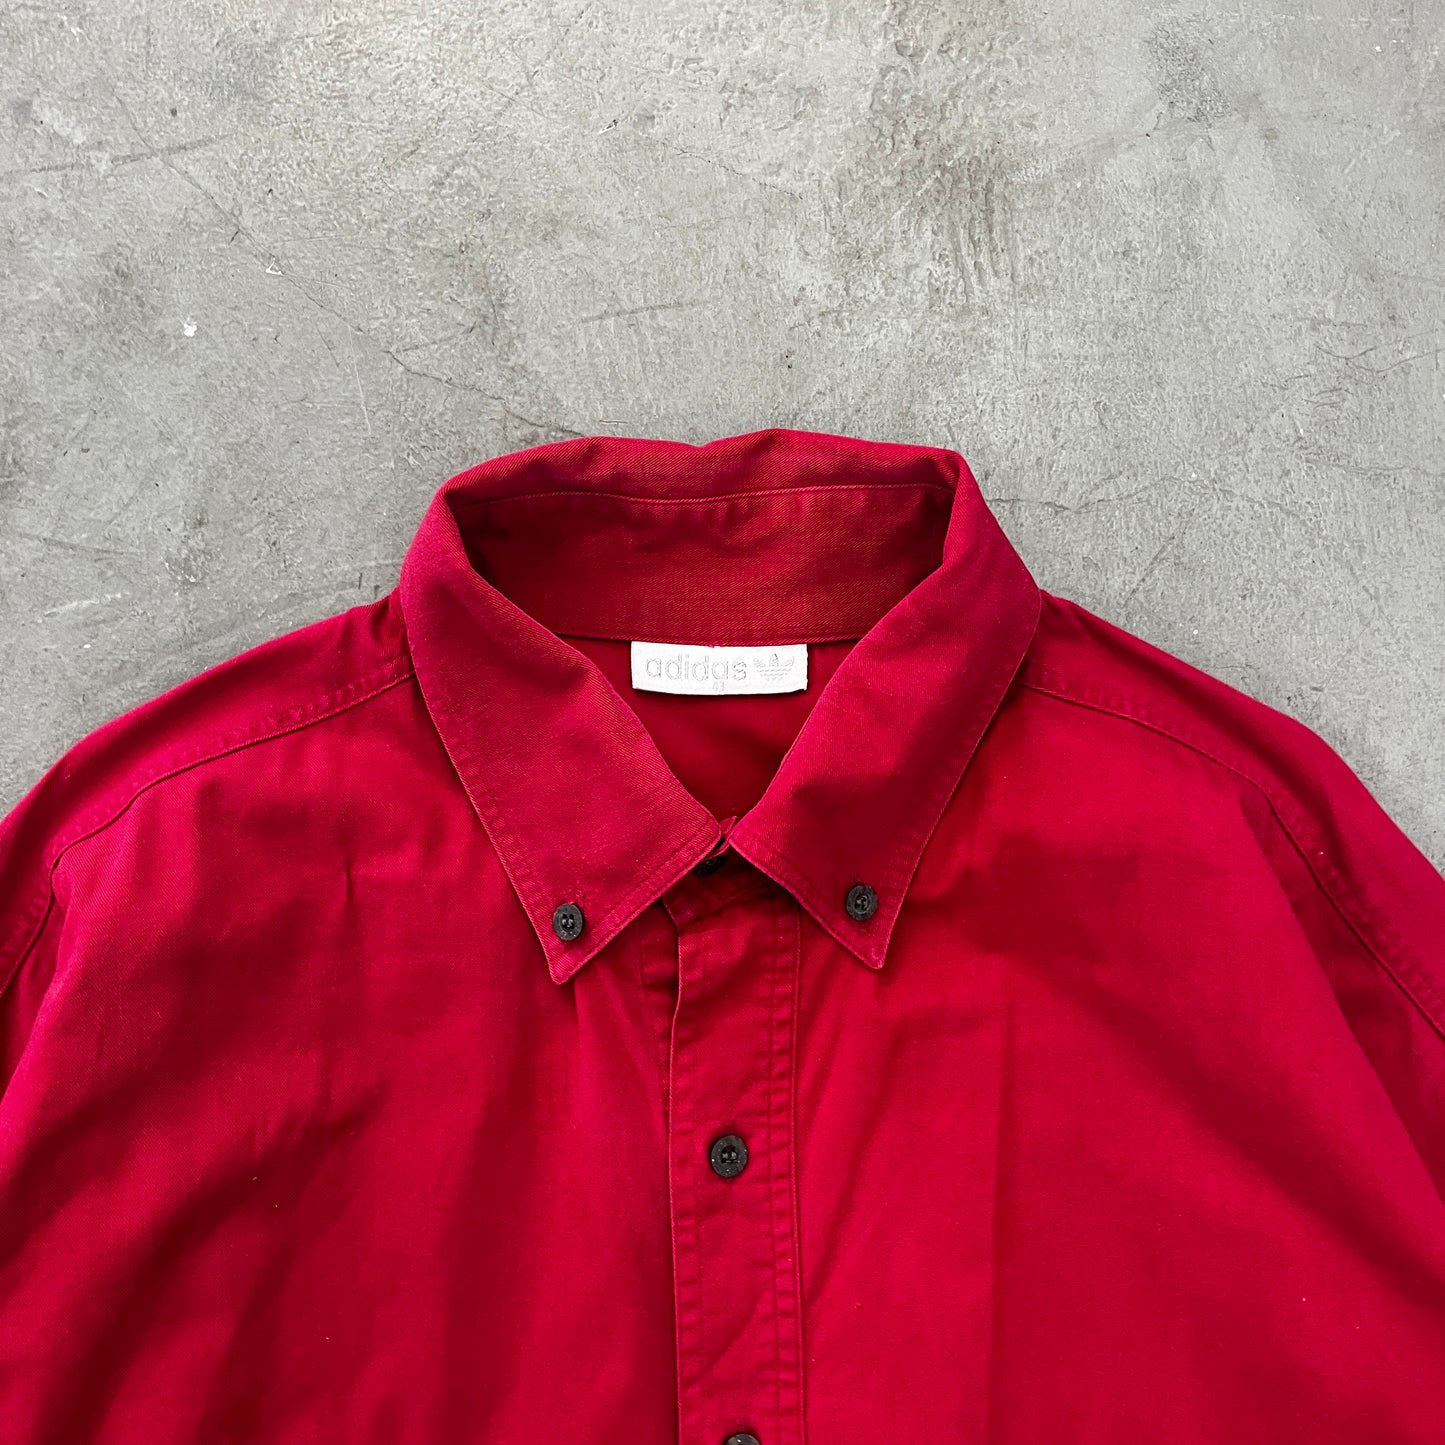 ADIDAS RED SHIRT 90s [XL]